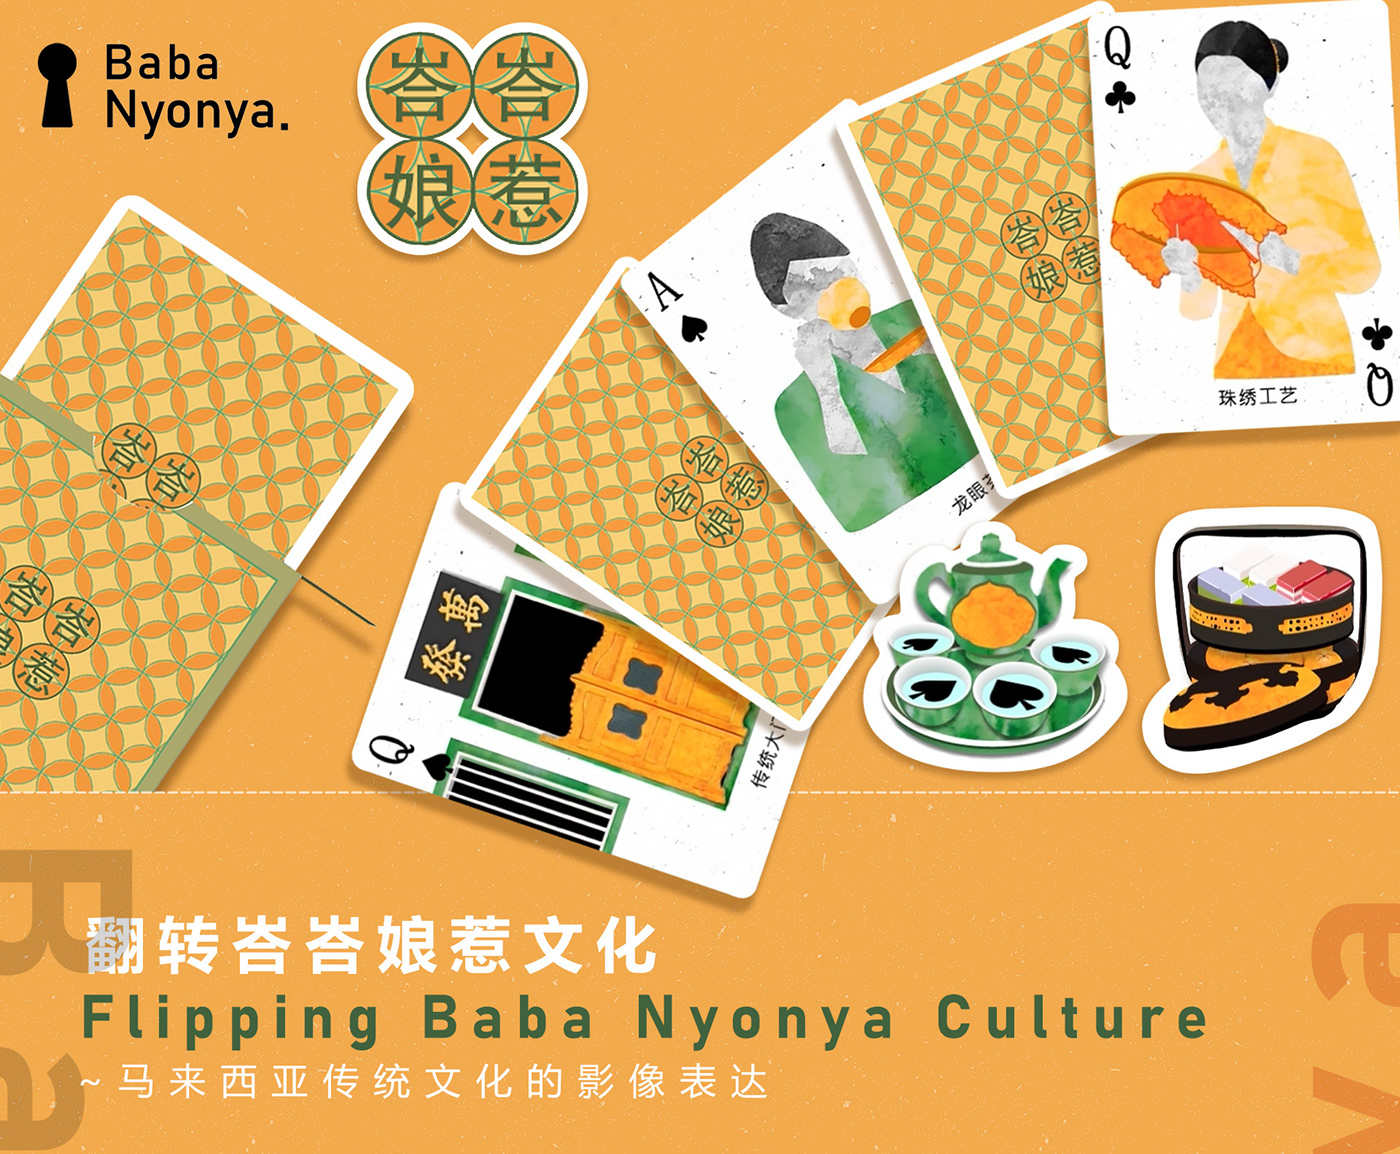 baba nyonya animation 2d culture malaysia poker cards finding job penang Image Expression innovation